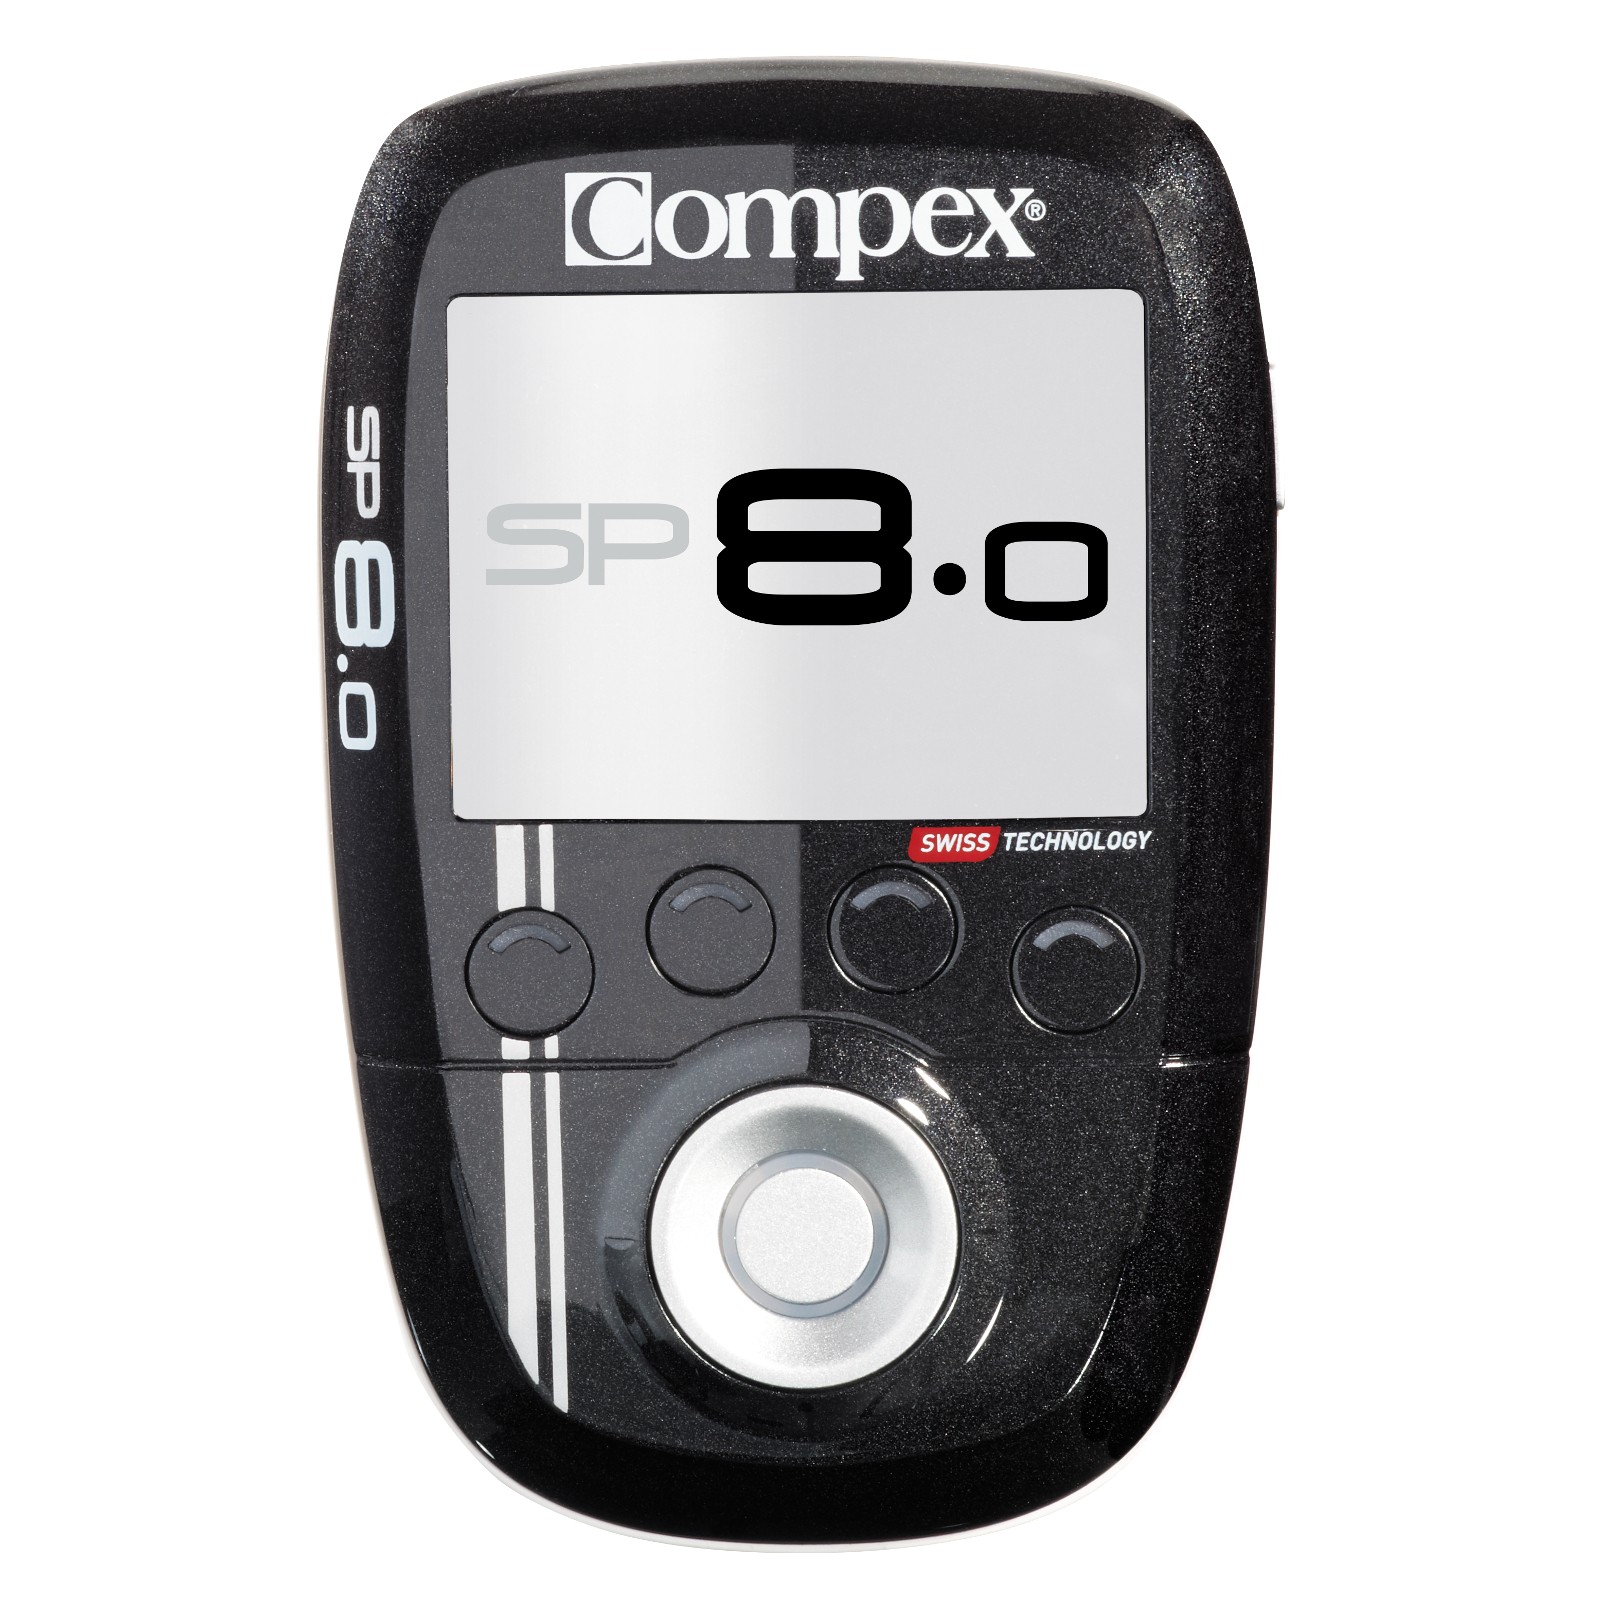   Compex  Wireless SP 8.0